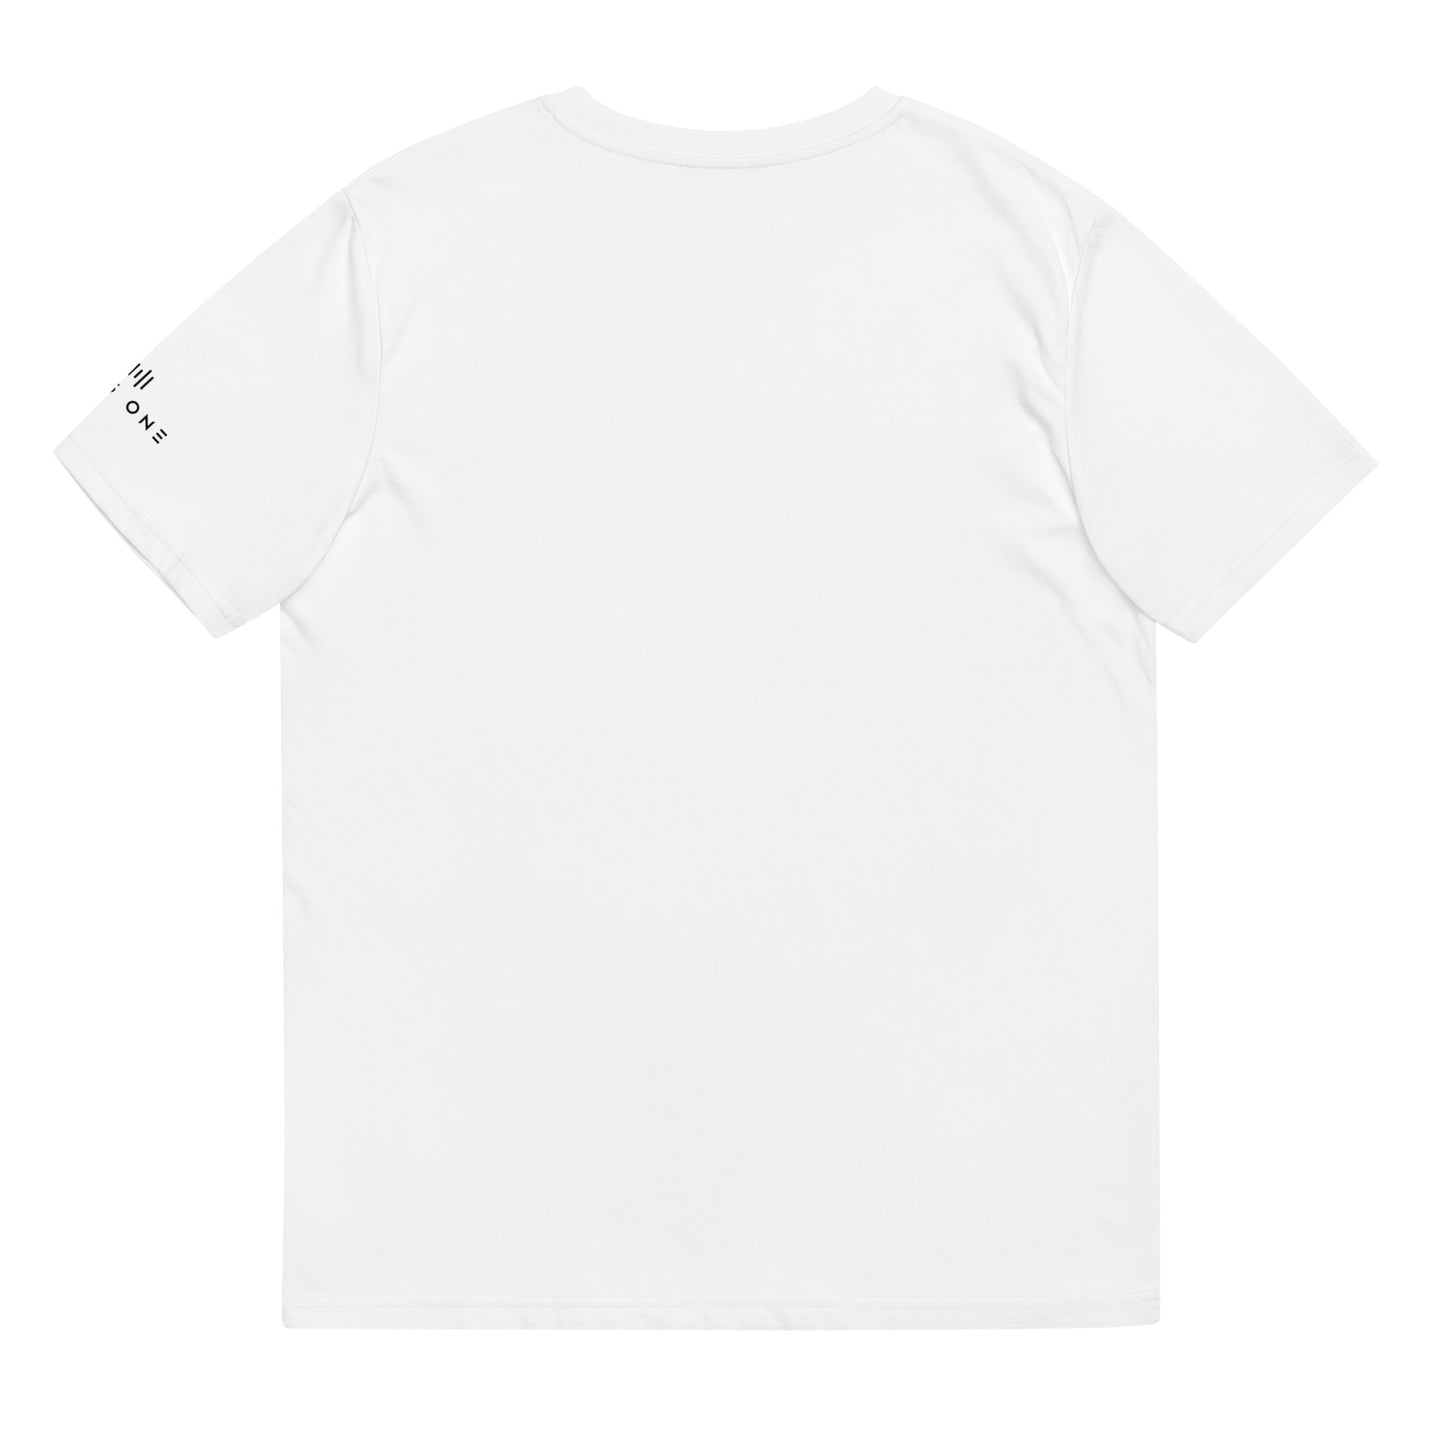 NFTM (US THEM) Unisex organic cotton t-shirt (Black Text)